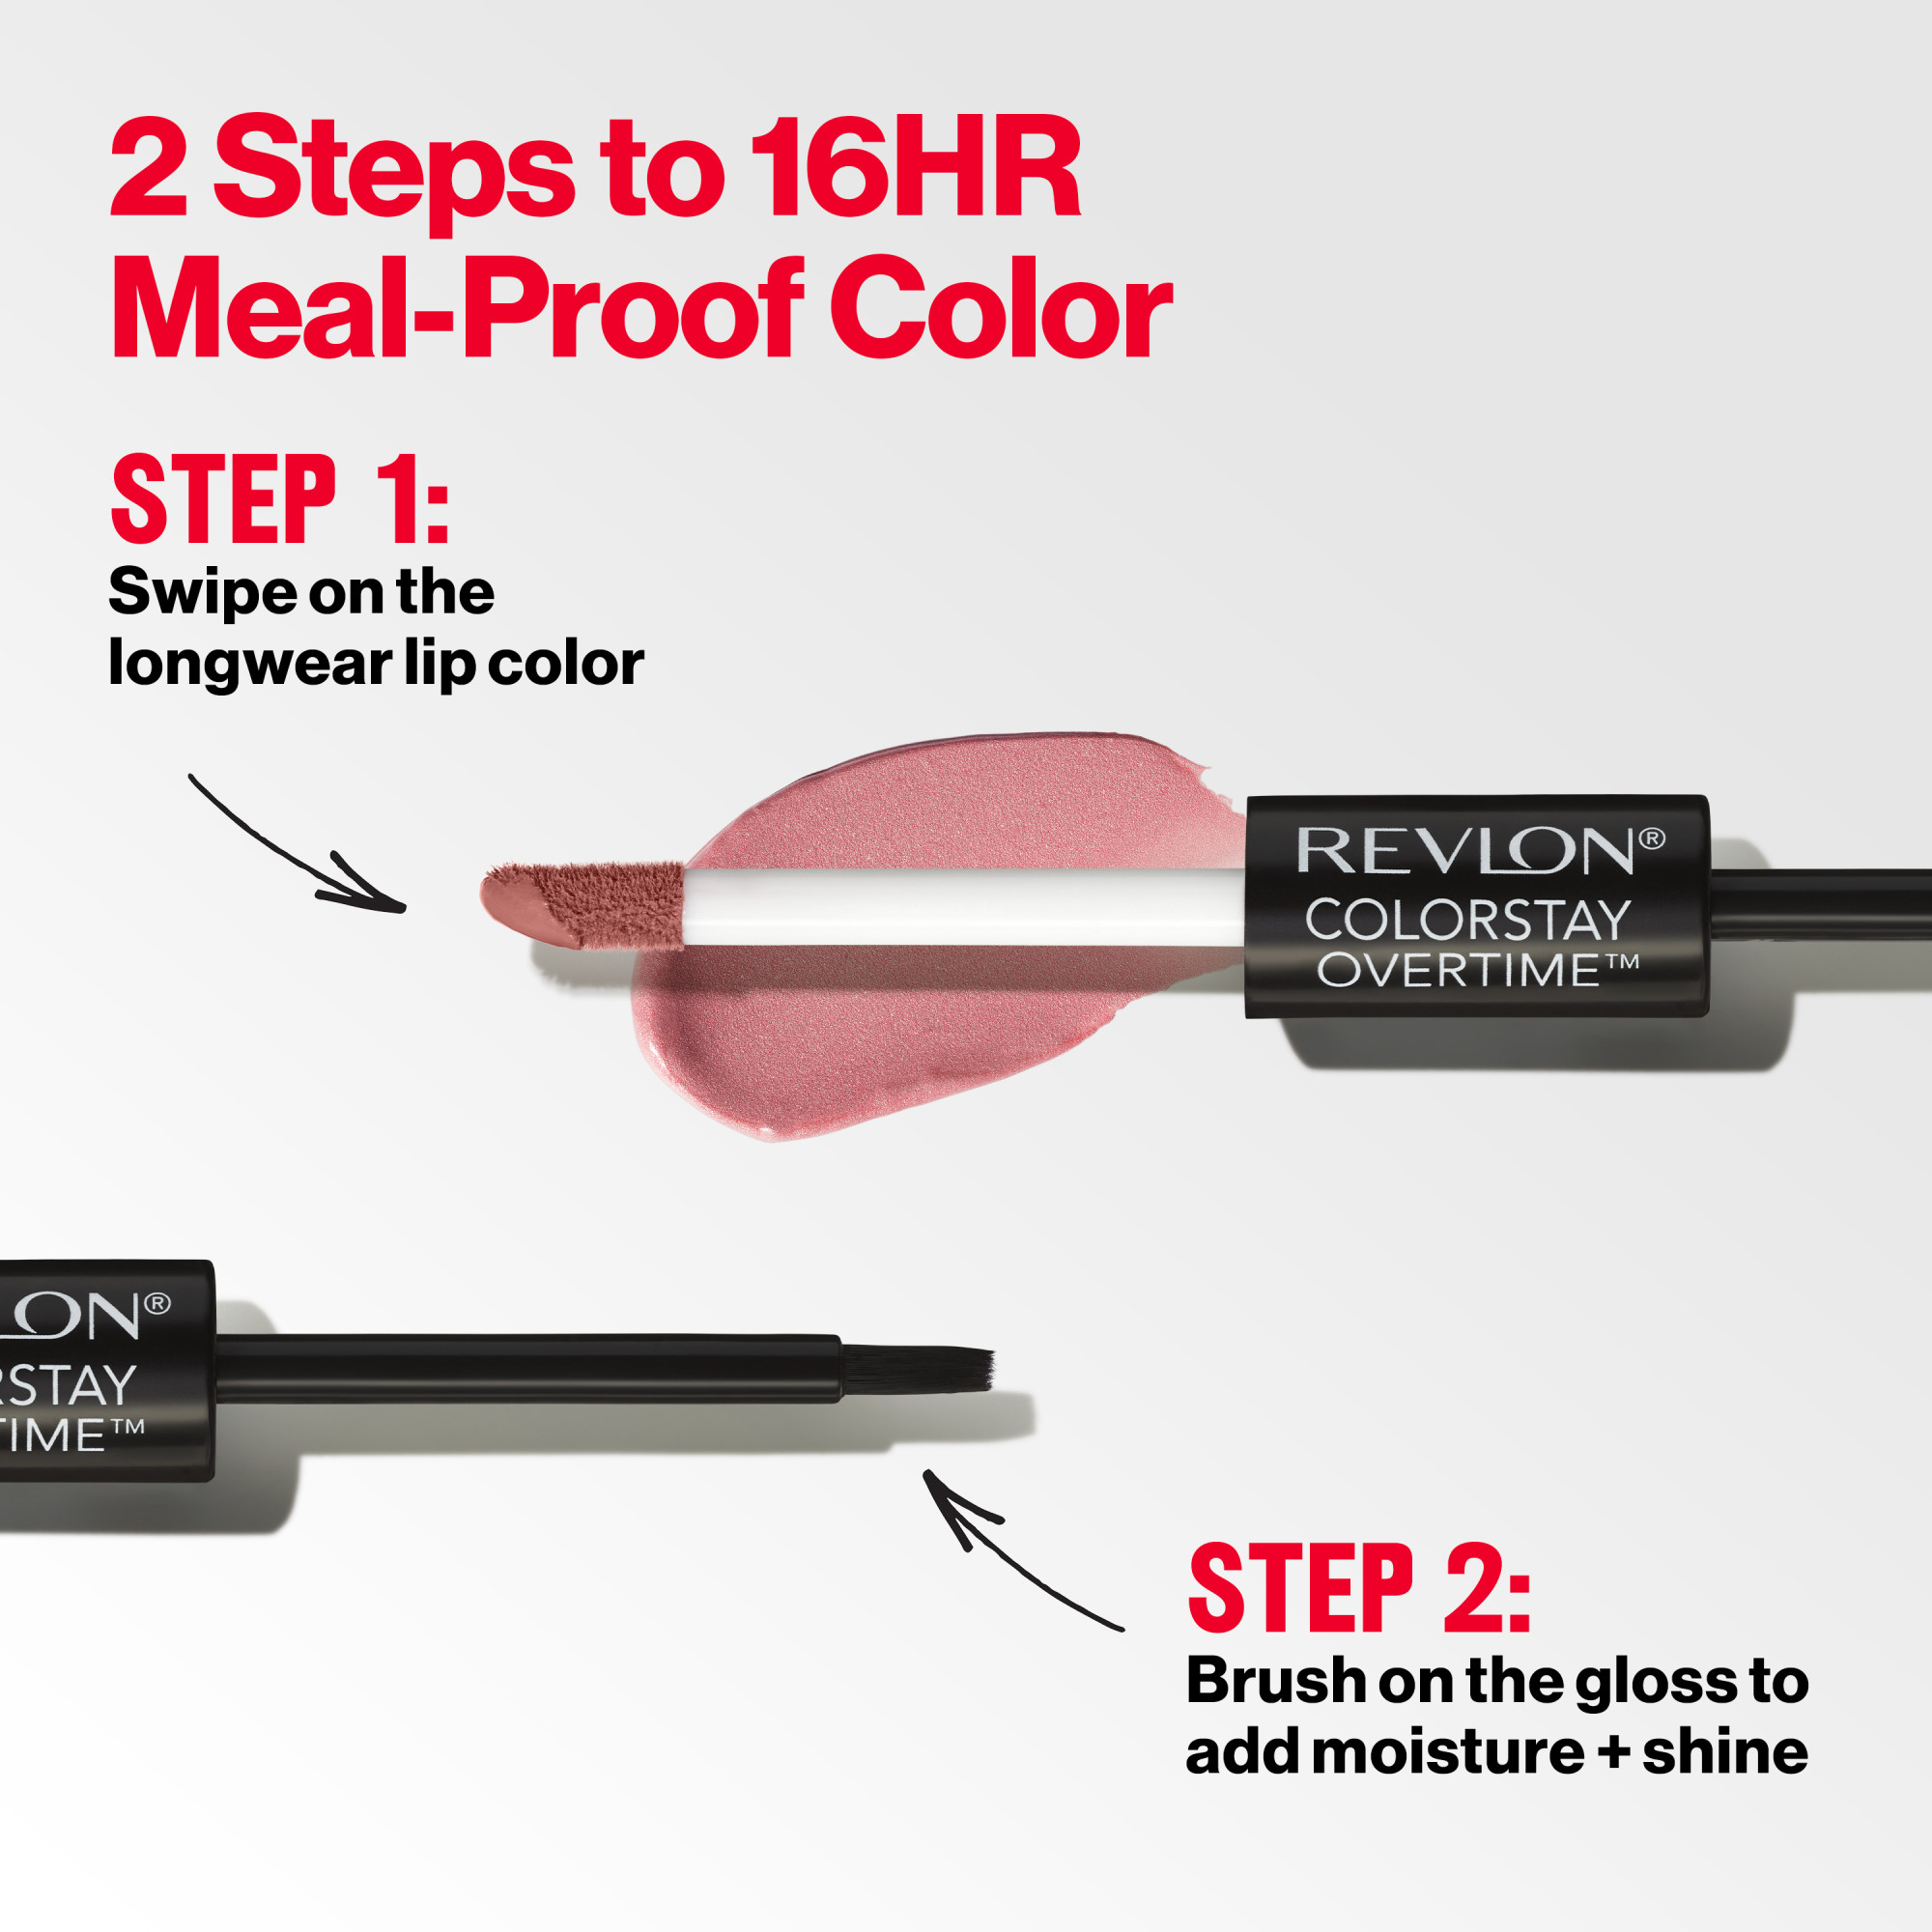 Revlon ColorStay Overtime Longwearing Gloss Lipstick with Vitamin E, 260 Perennial Plum, 0.07 fl oz - image 5 of 8